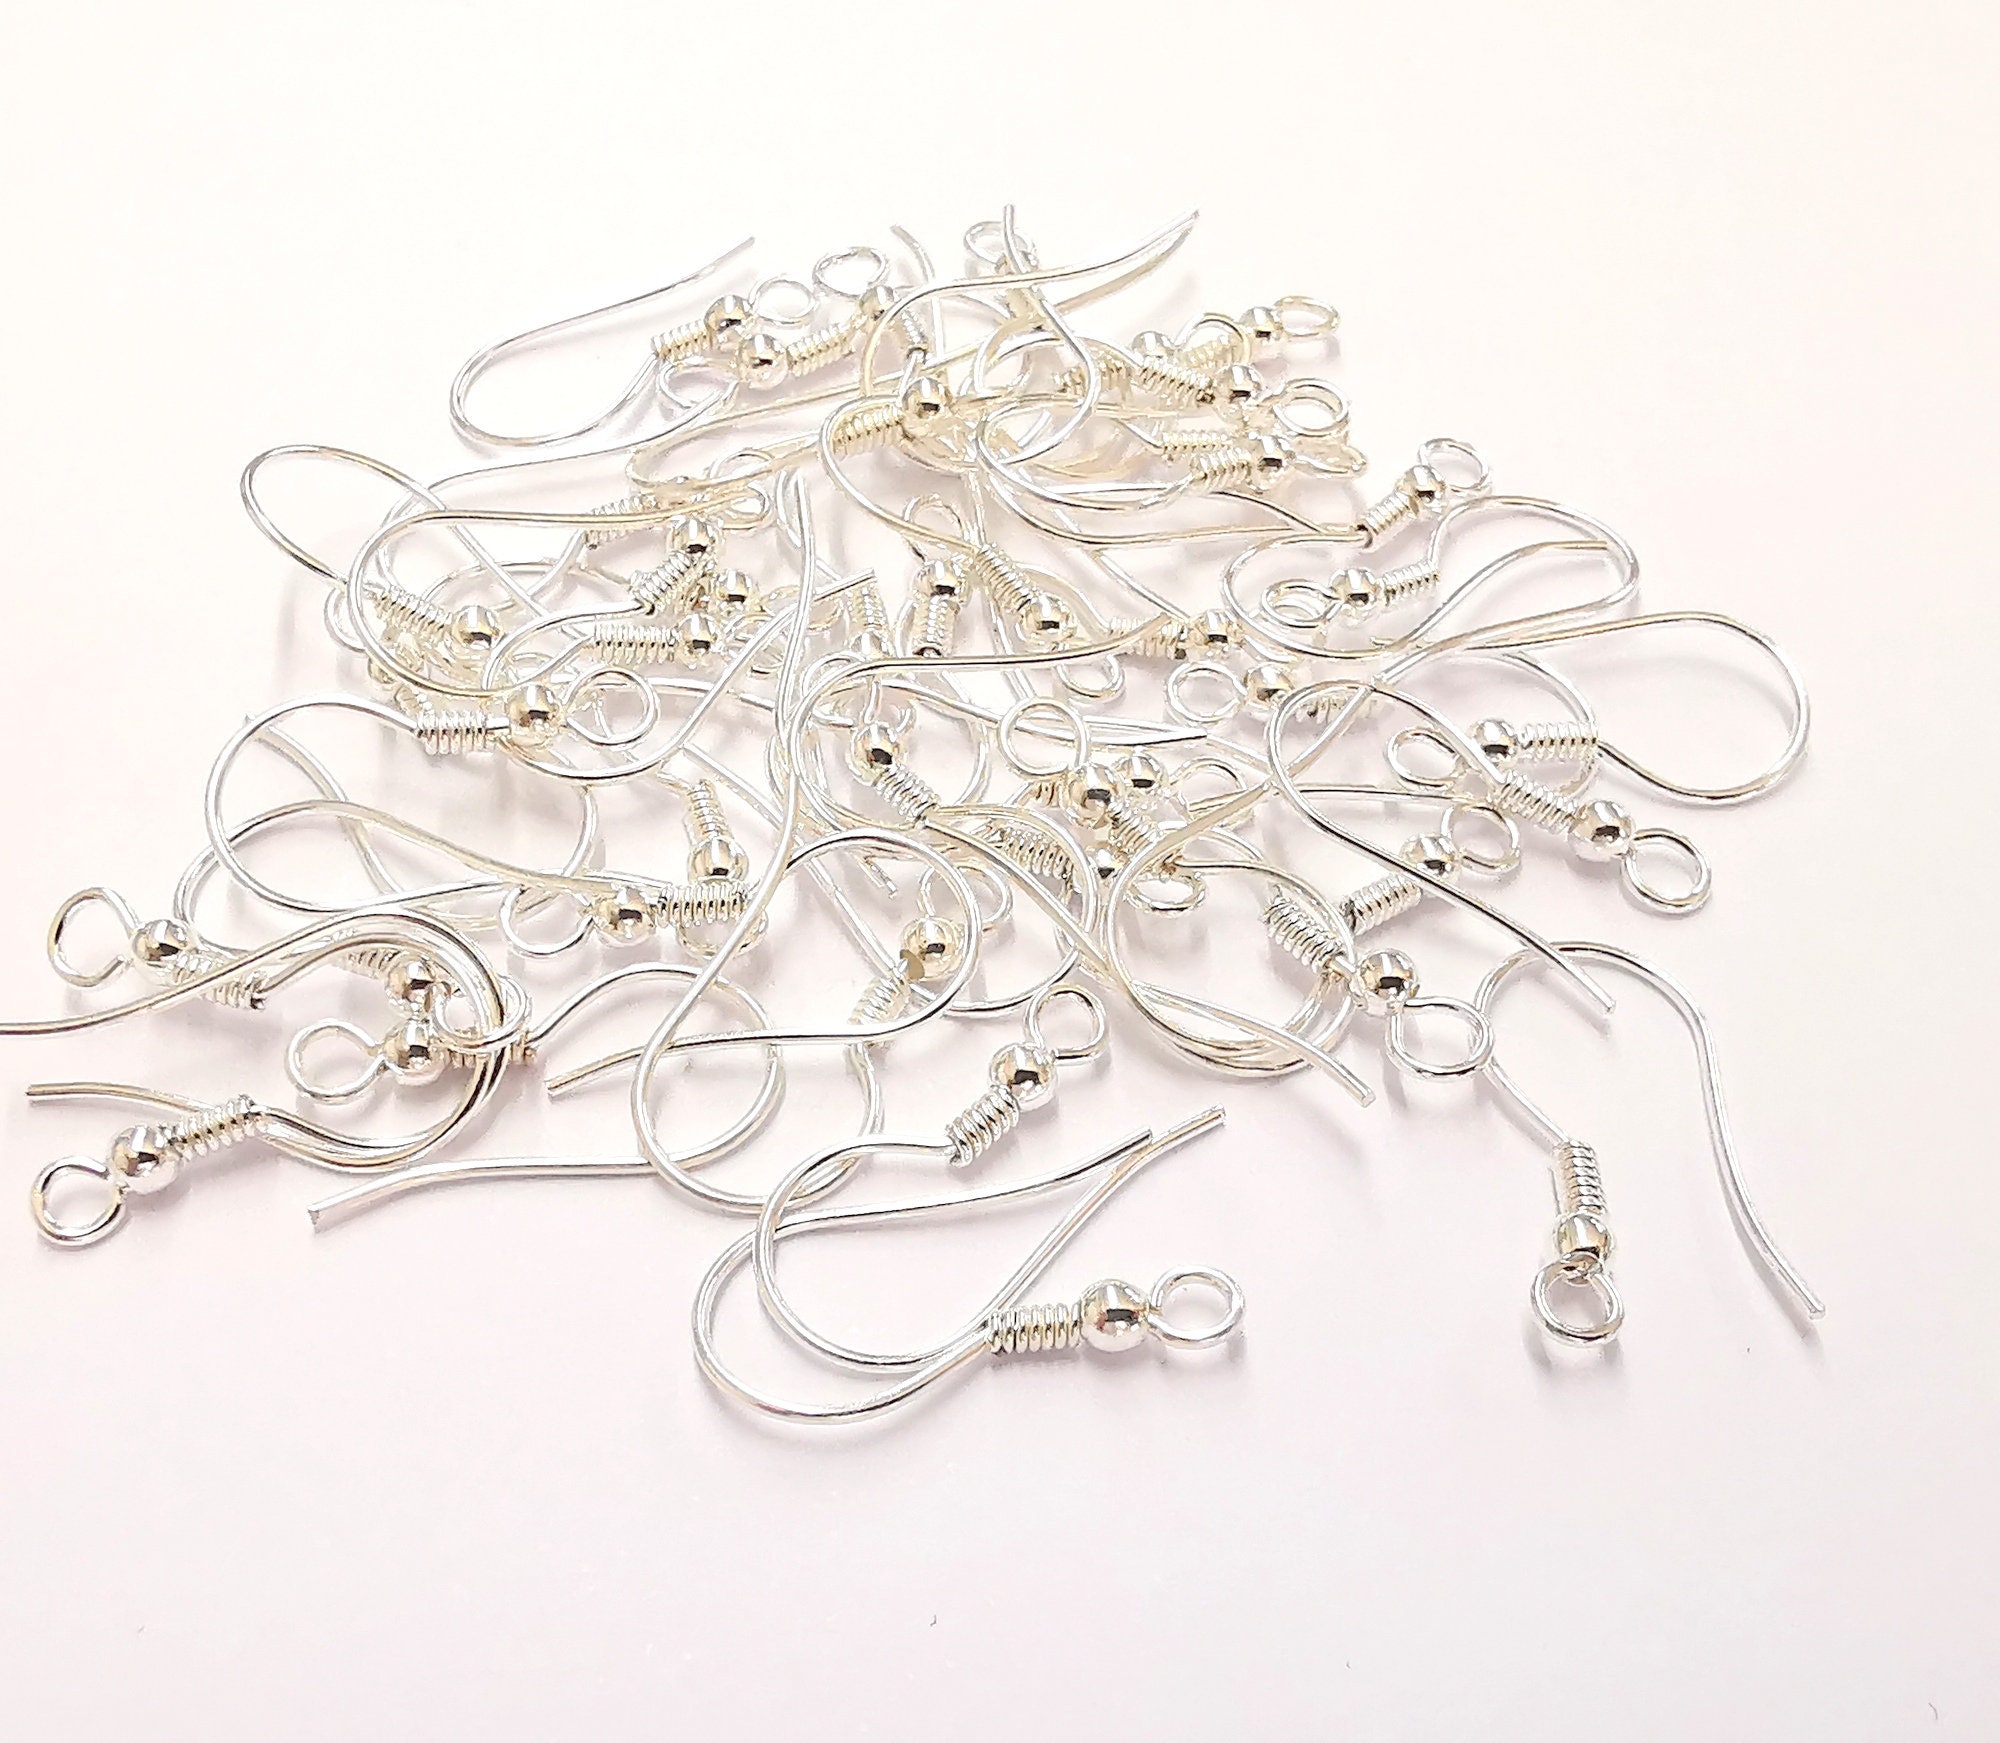 4 Oxidized Sterling Silver Earring Hook 4 Pcs (2 pairs) 925K Silver Earring  Wire Findings (20mm) G30353